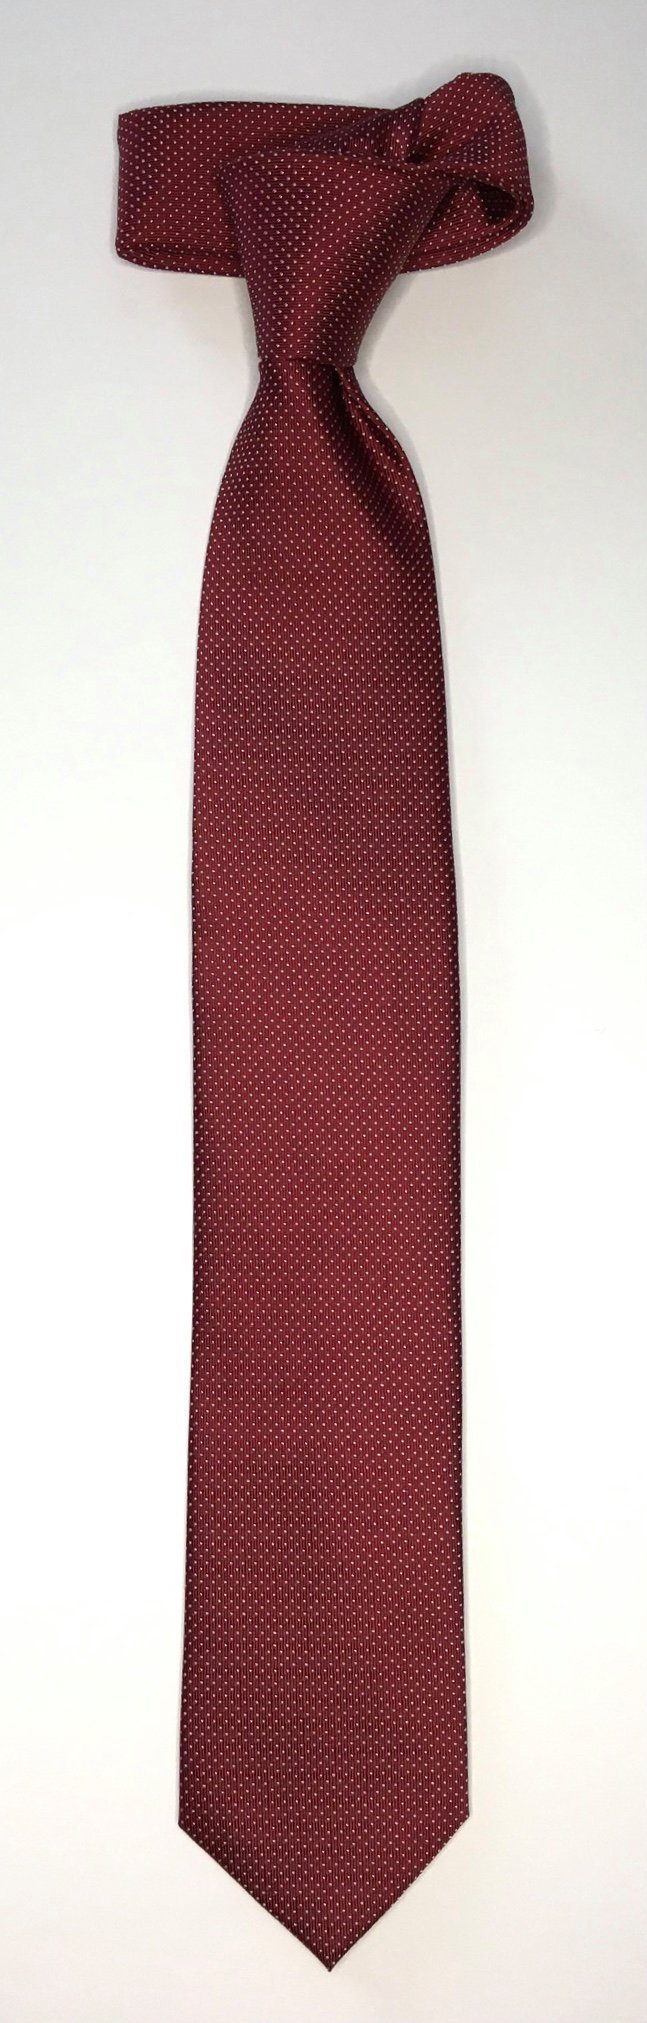 Seidenfalter Bordeaux 7cm Picoté Krawatte Krawatte Seidenfalter